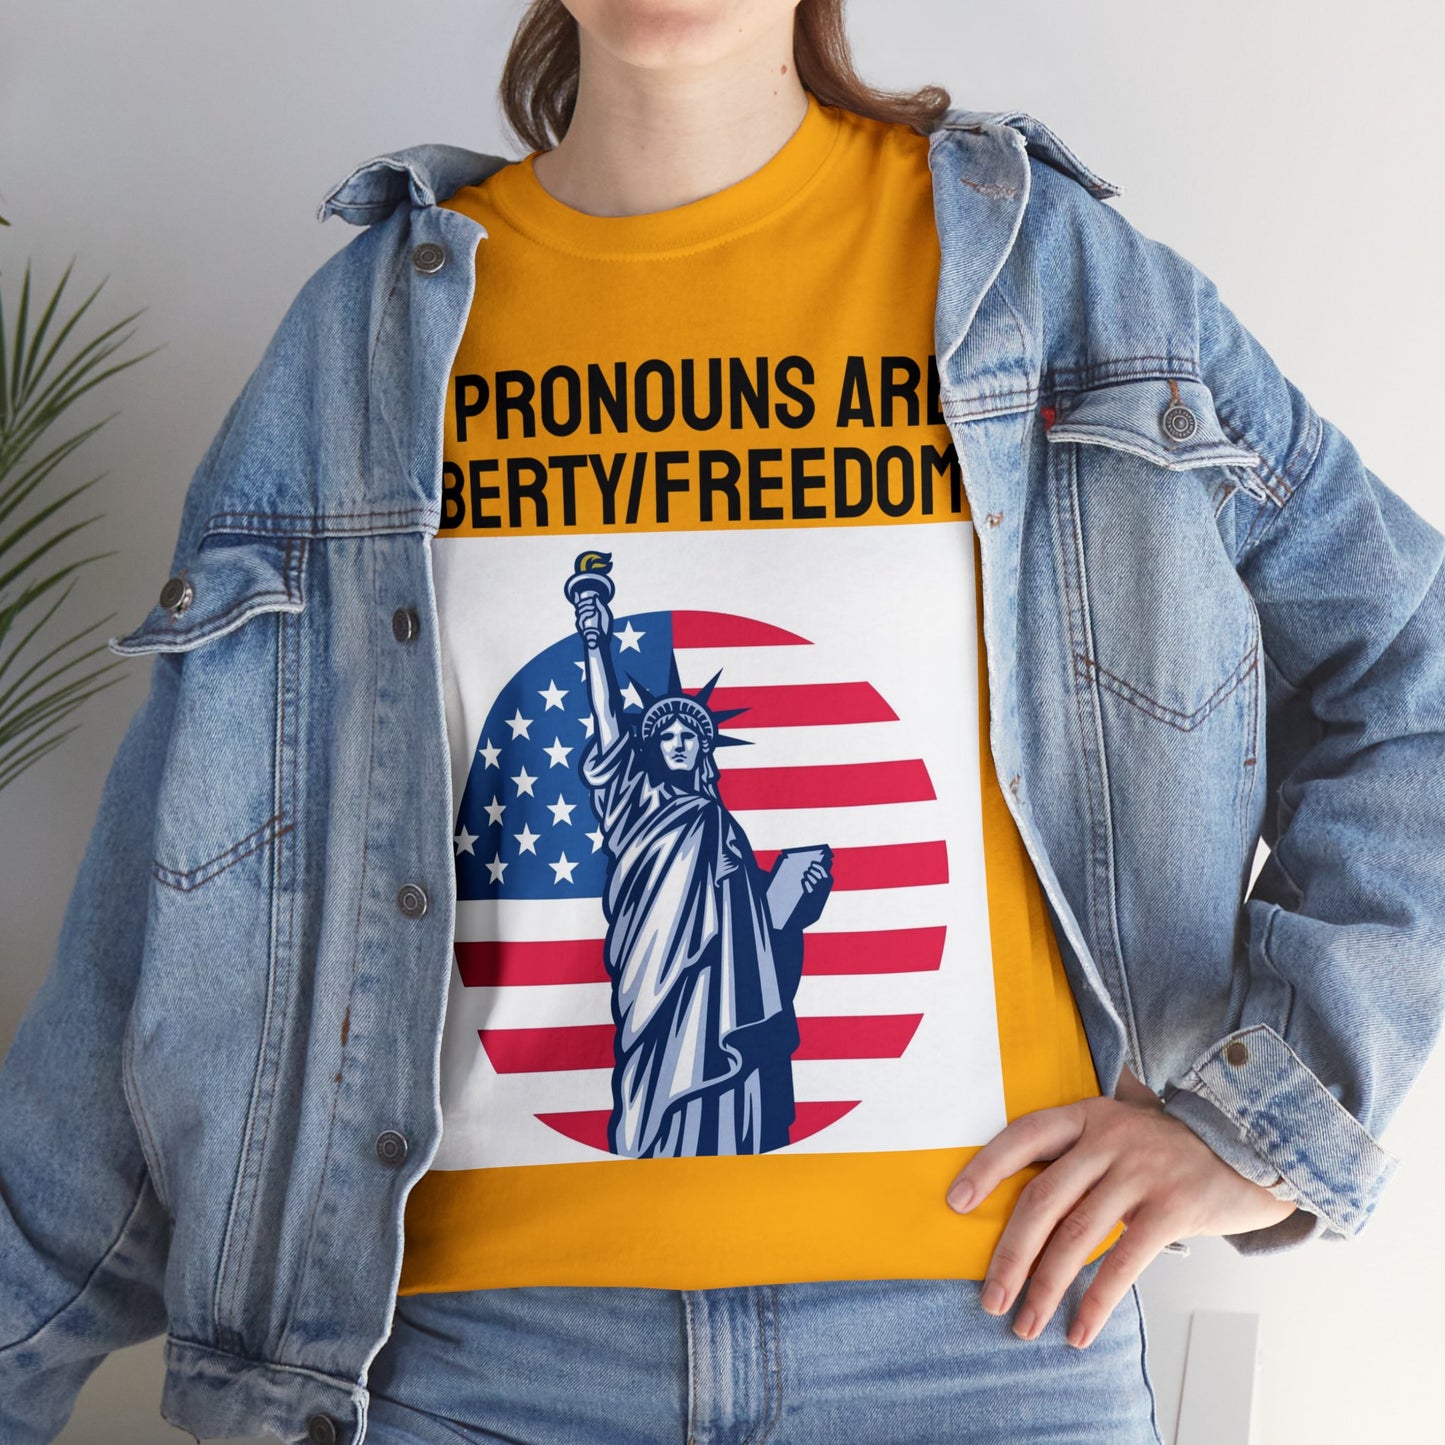 Pronouns Liberty Freedom